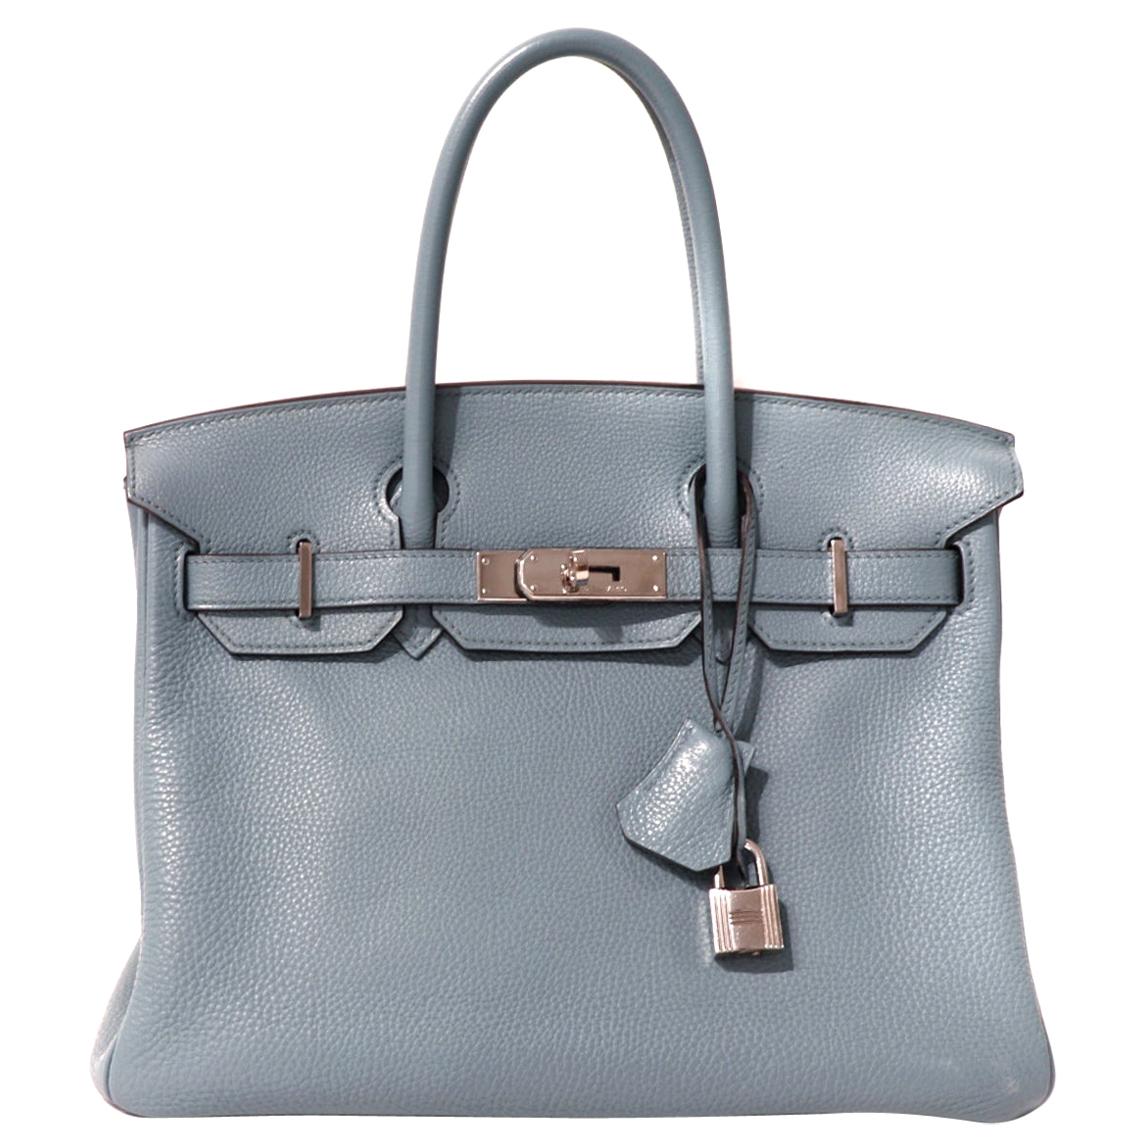 Hermès Blue Ciel Togo 30 cm Birkin Bag